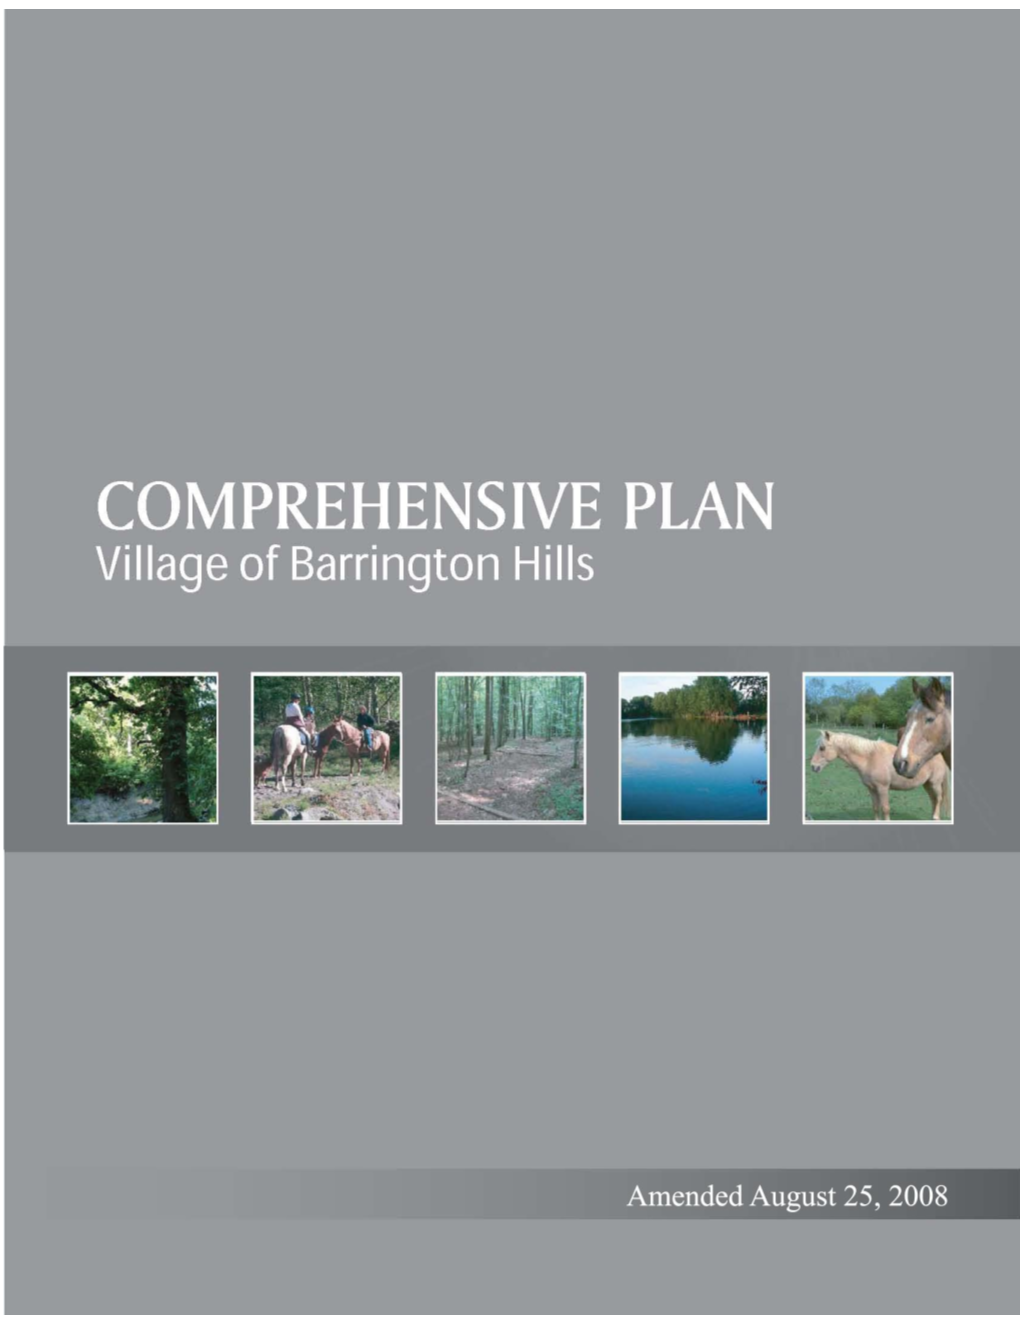 Comprehensive Plan for the Village of Barrington Hills